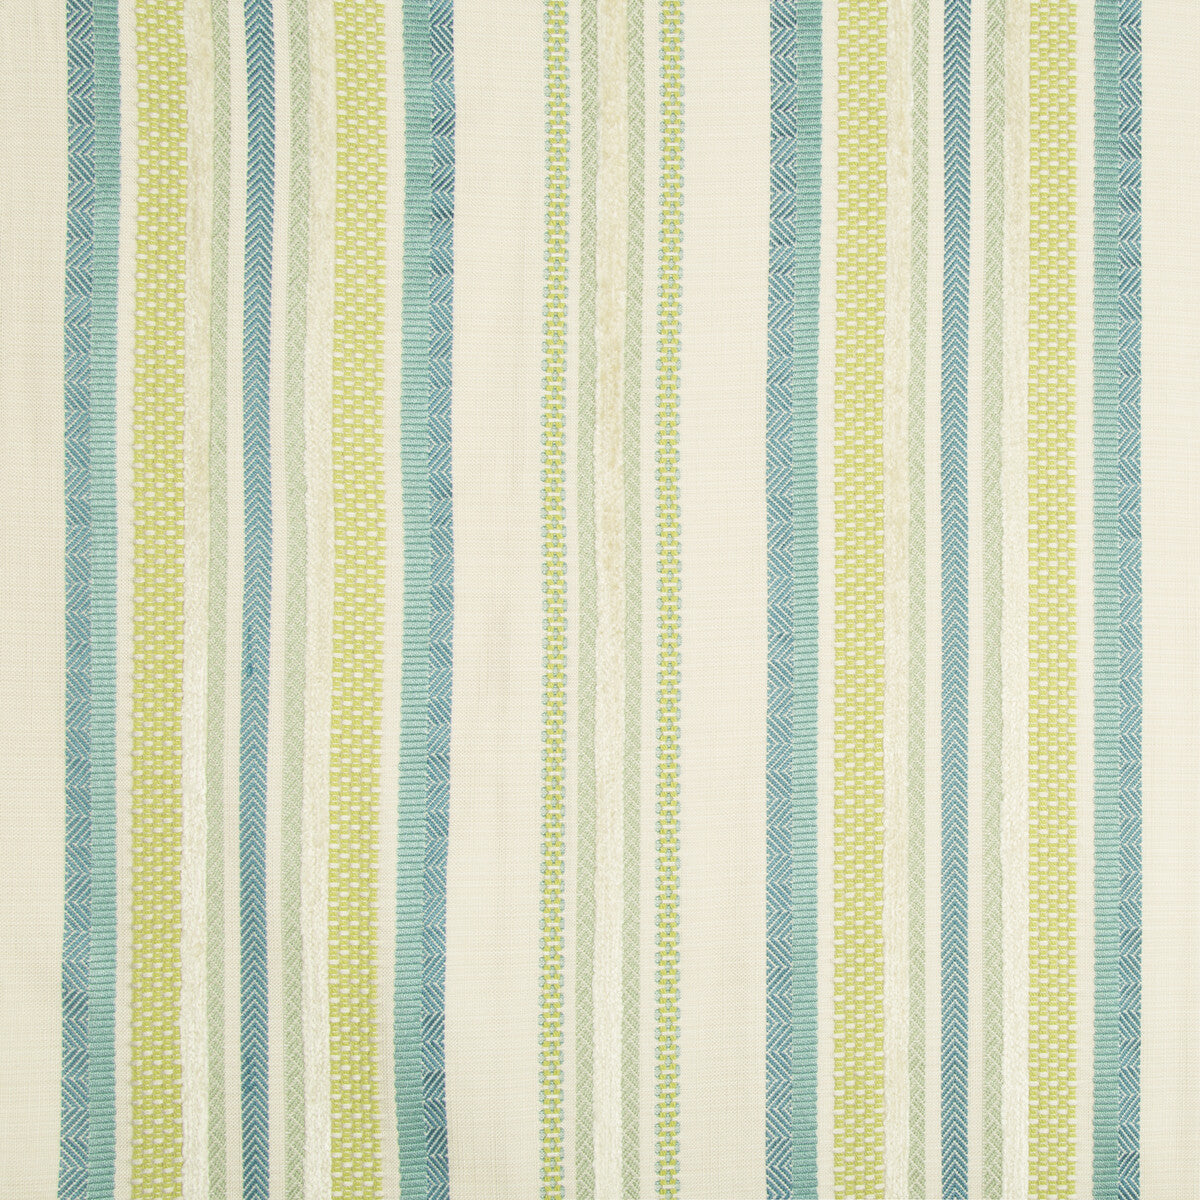 Kravet Design fabric in 34727-315 color - pattern 34727.315.0 - by Kravet Design in the Gis collection